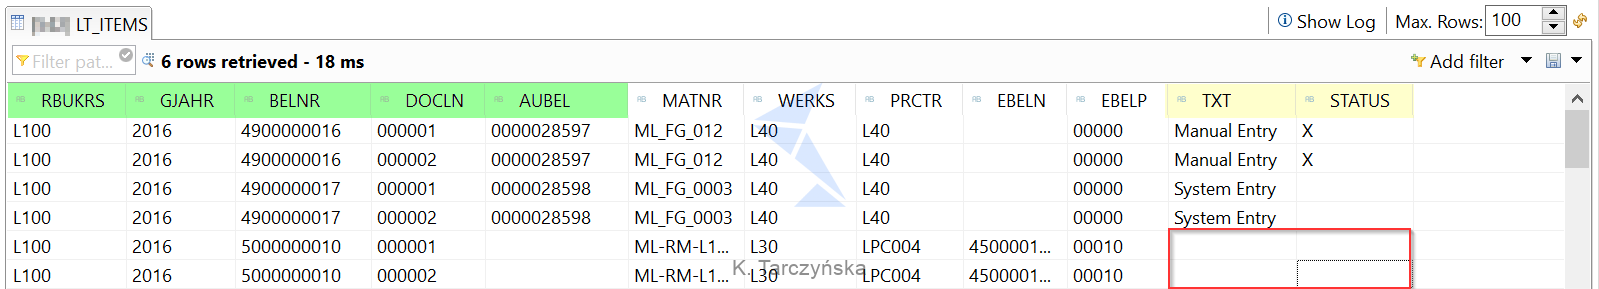 LT_ITEMS table (missing data)